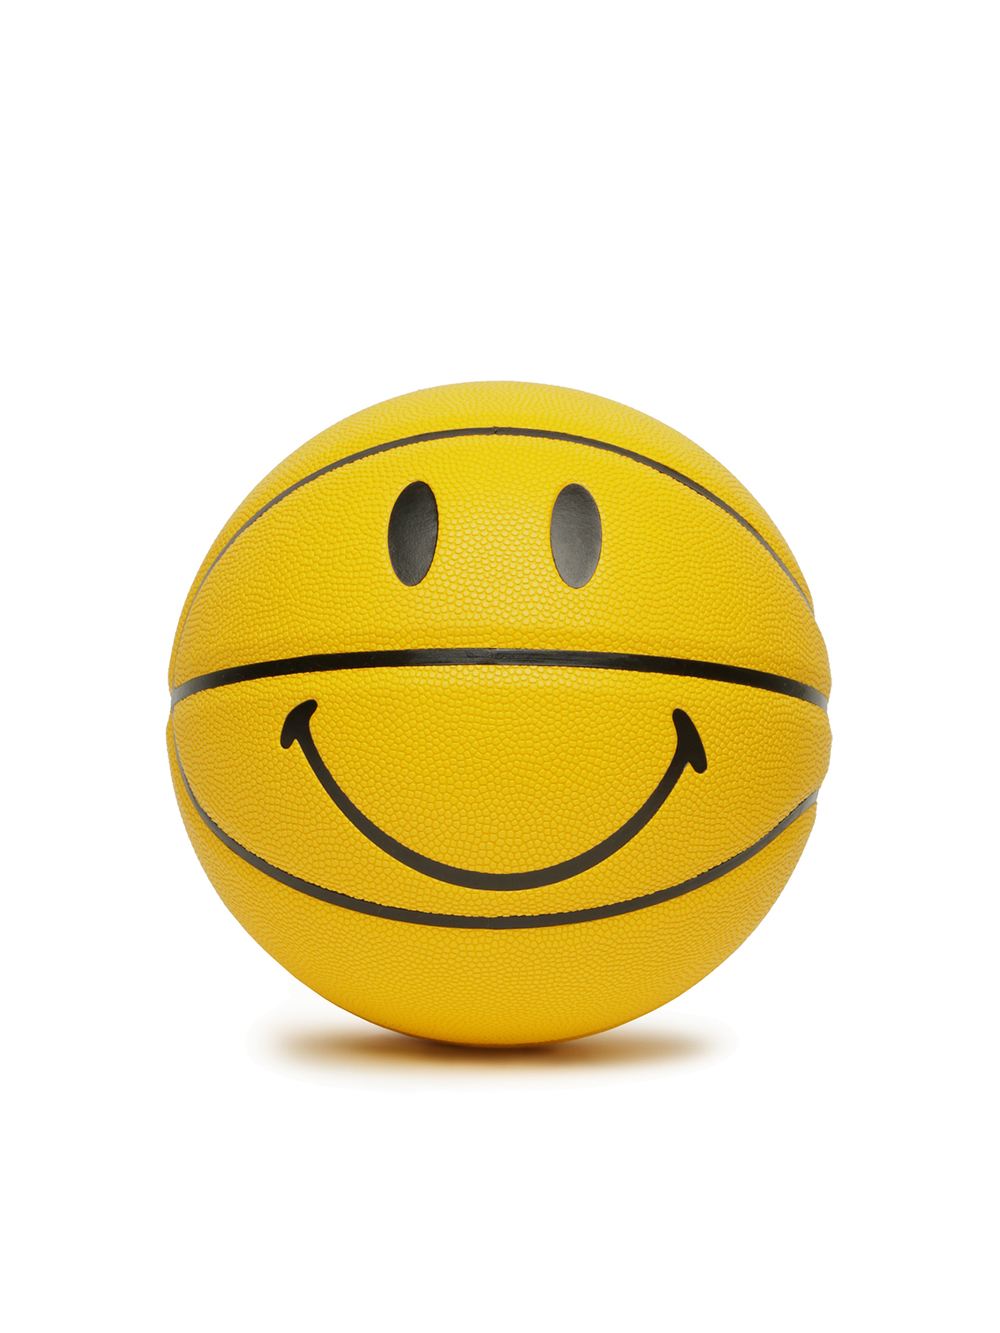 Мяч Smiley